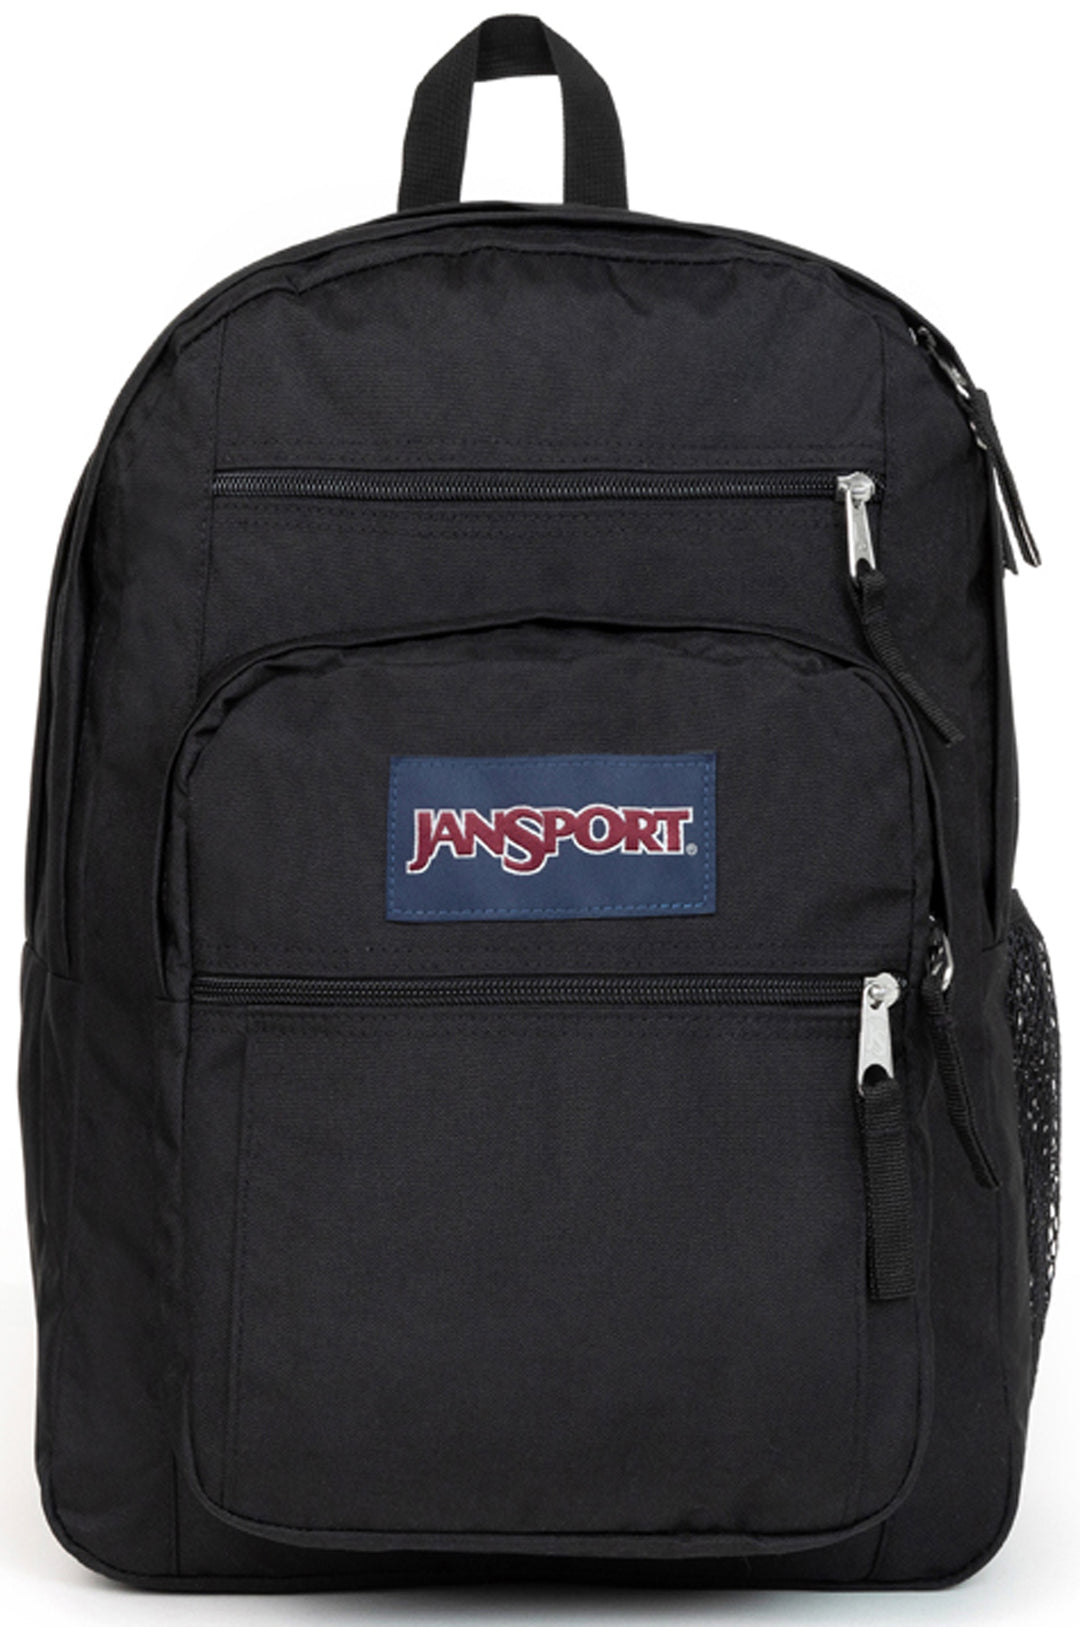 – Student In Jansport Backpack 4feetshoes Black Big